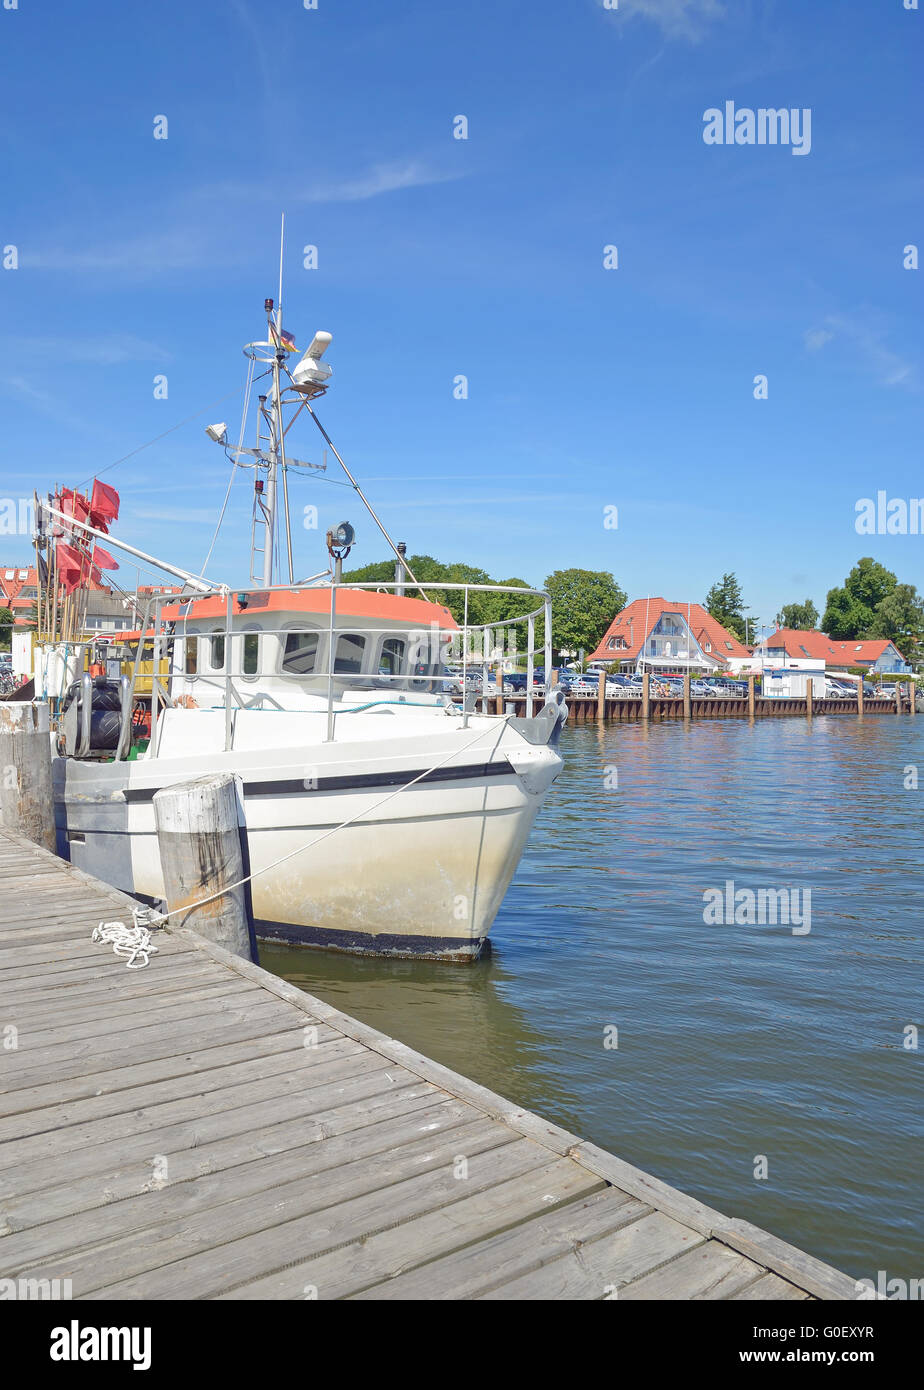 Harbor of Breege-Juliusruh,Ruegen Island,Germany Stock Photo